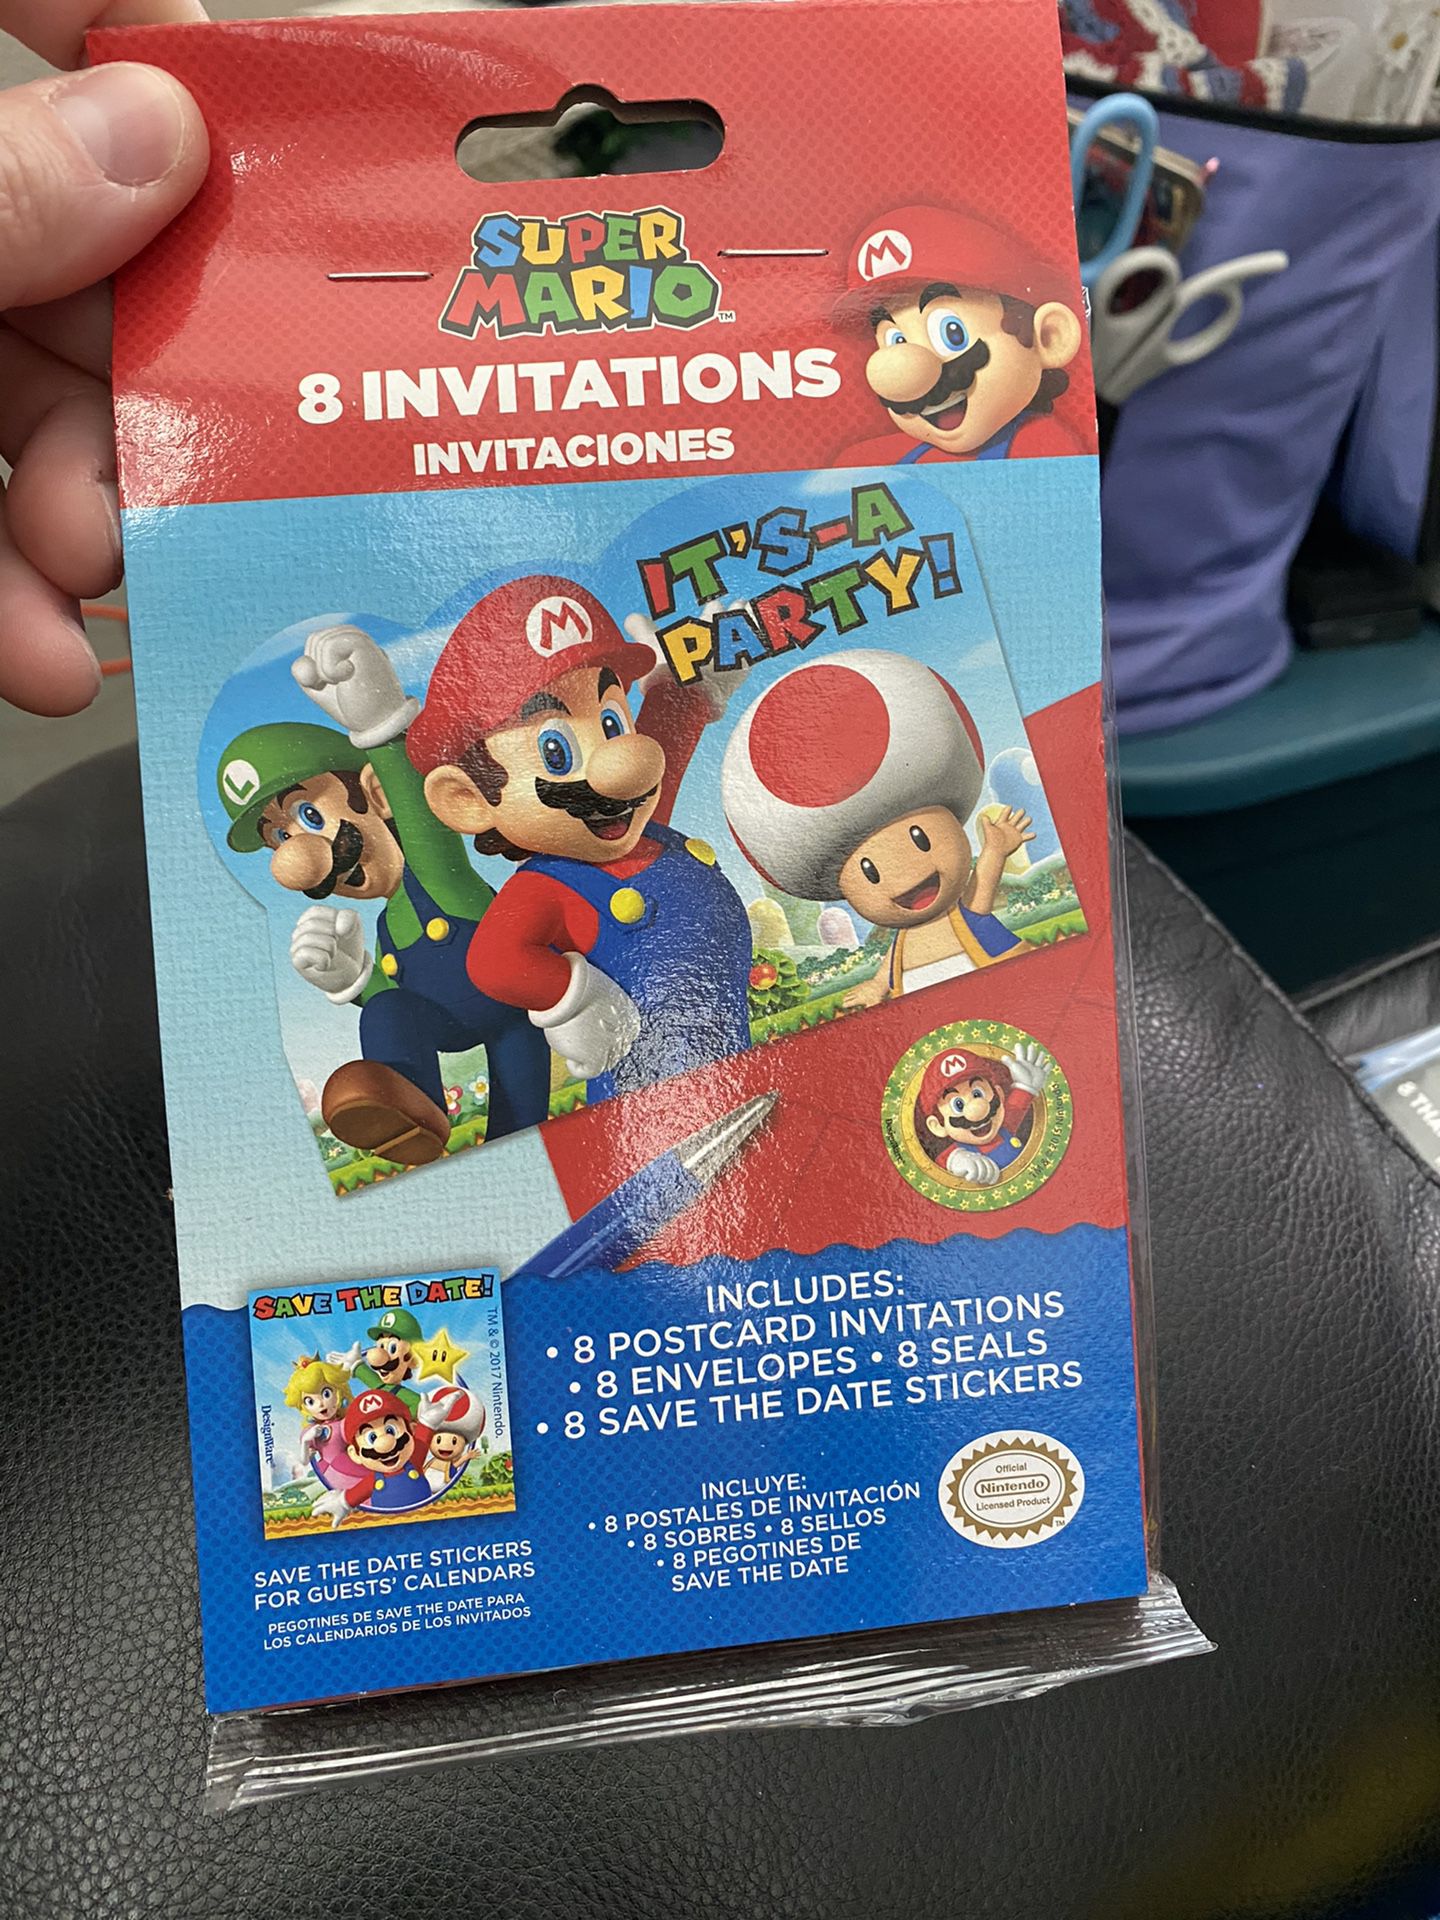 New Super Mario Party Invitations!